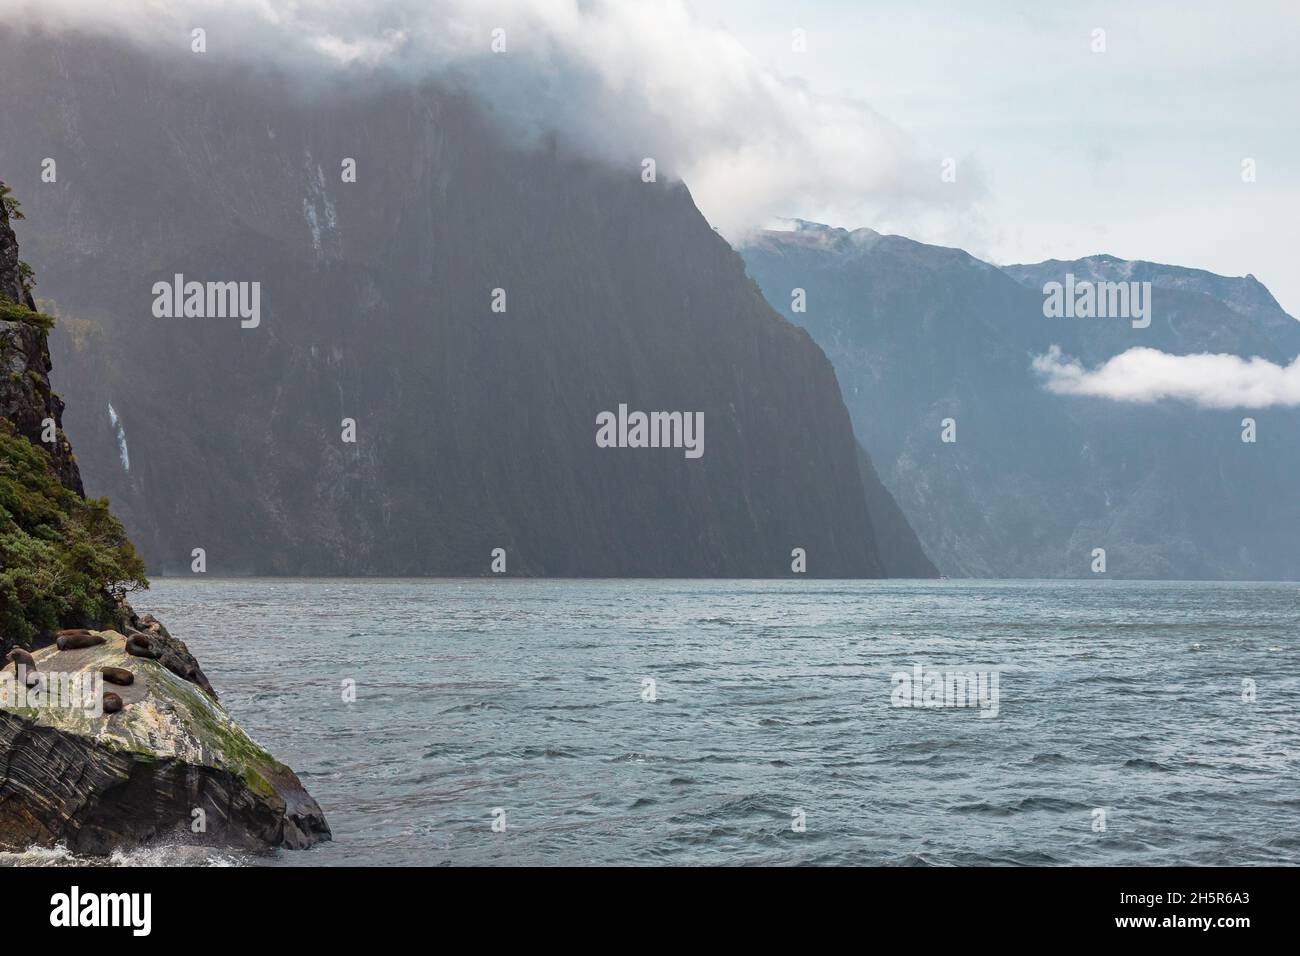 Landscapes of Fiordland National Park. Marine mammals on the rocks of the fjords. Navy seals. New Zealand Stock Photo